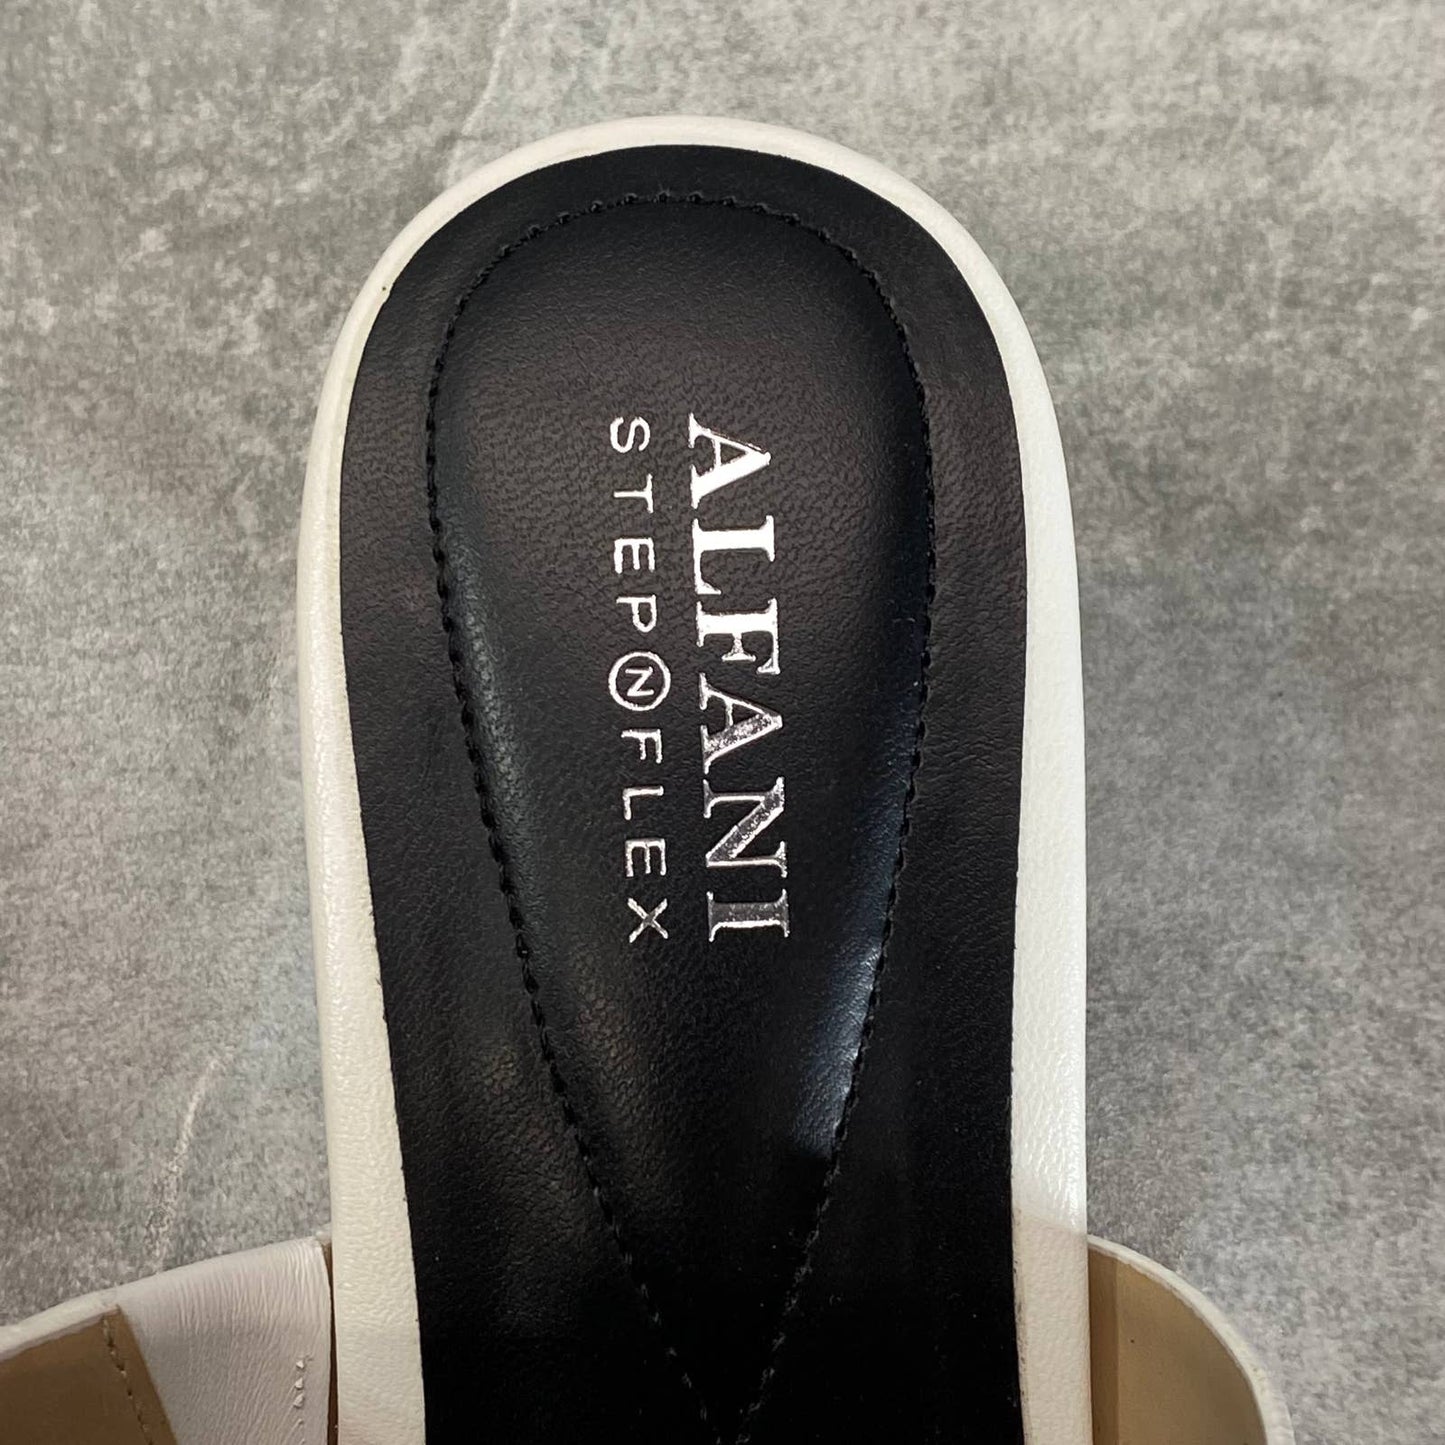 ALFANI STEP 'N FLEX Women's White Leather Colyerr Thong Slip-On Sandal SZ 10